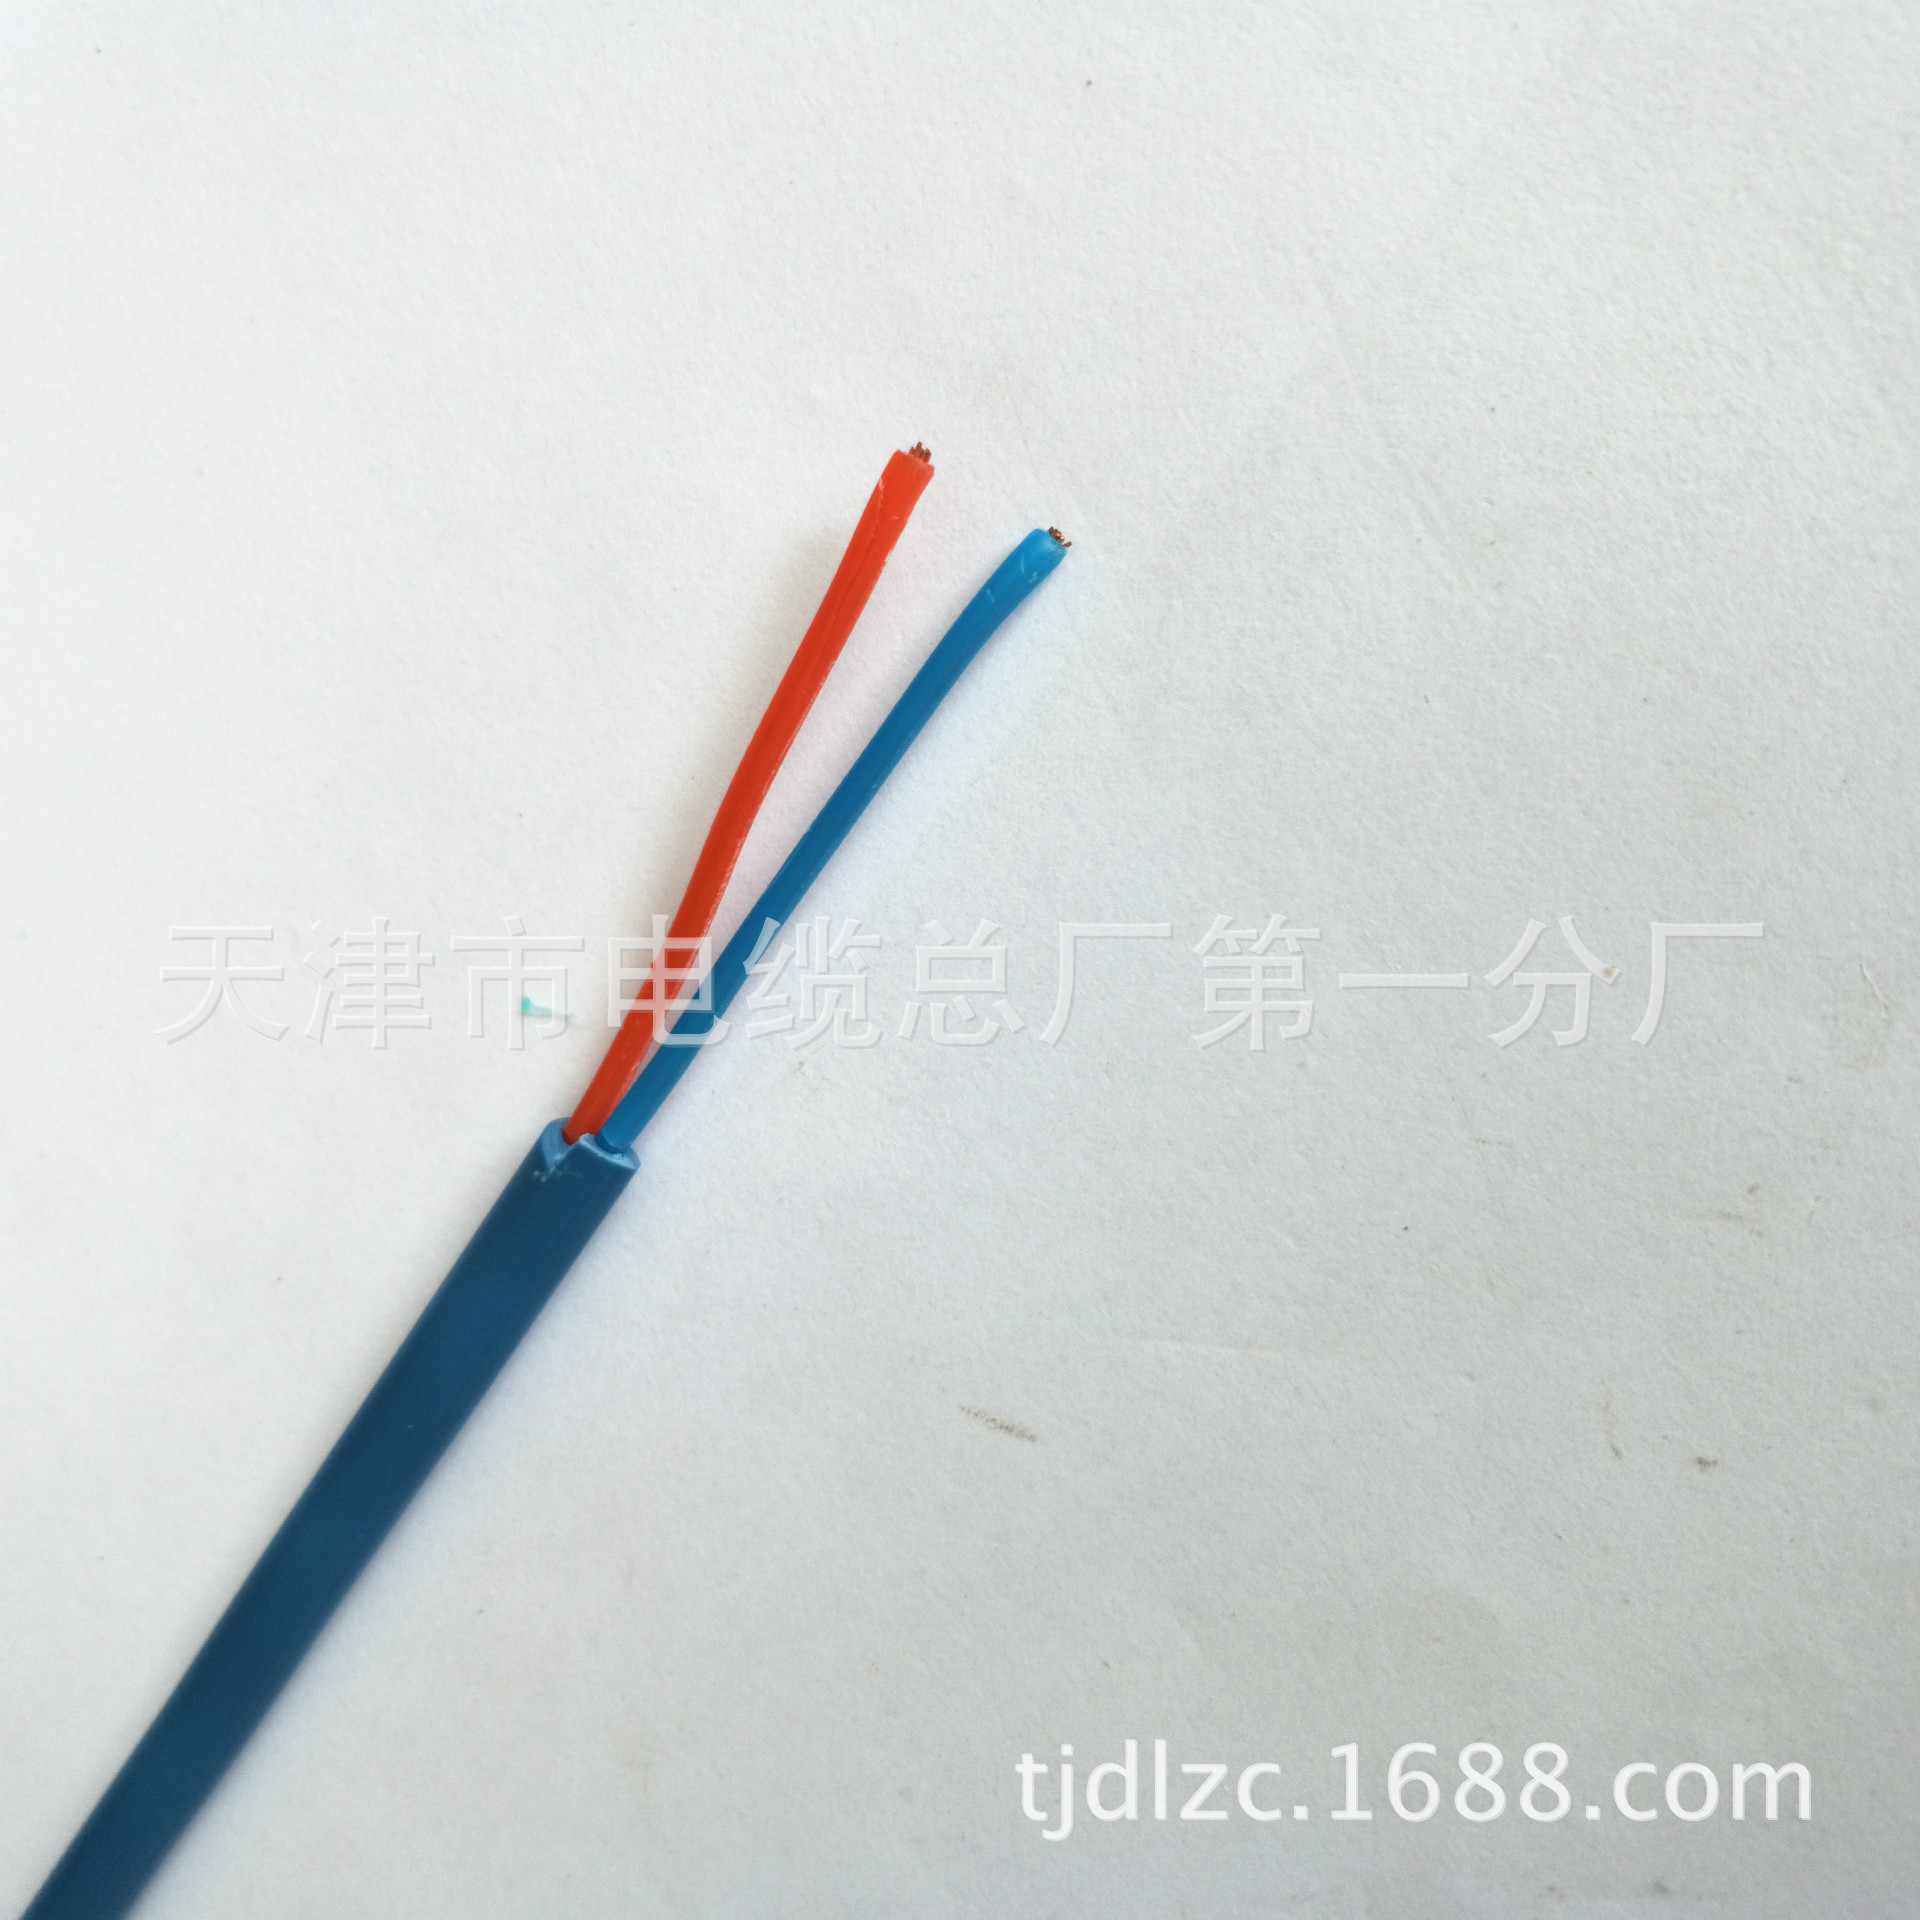 MHYVR1*4*42/0.15 软心矿用防爆通信电缆 蓝色多心电缆示例图4